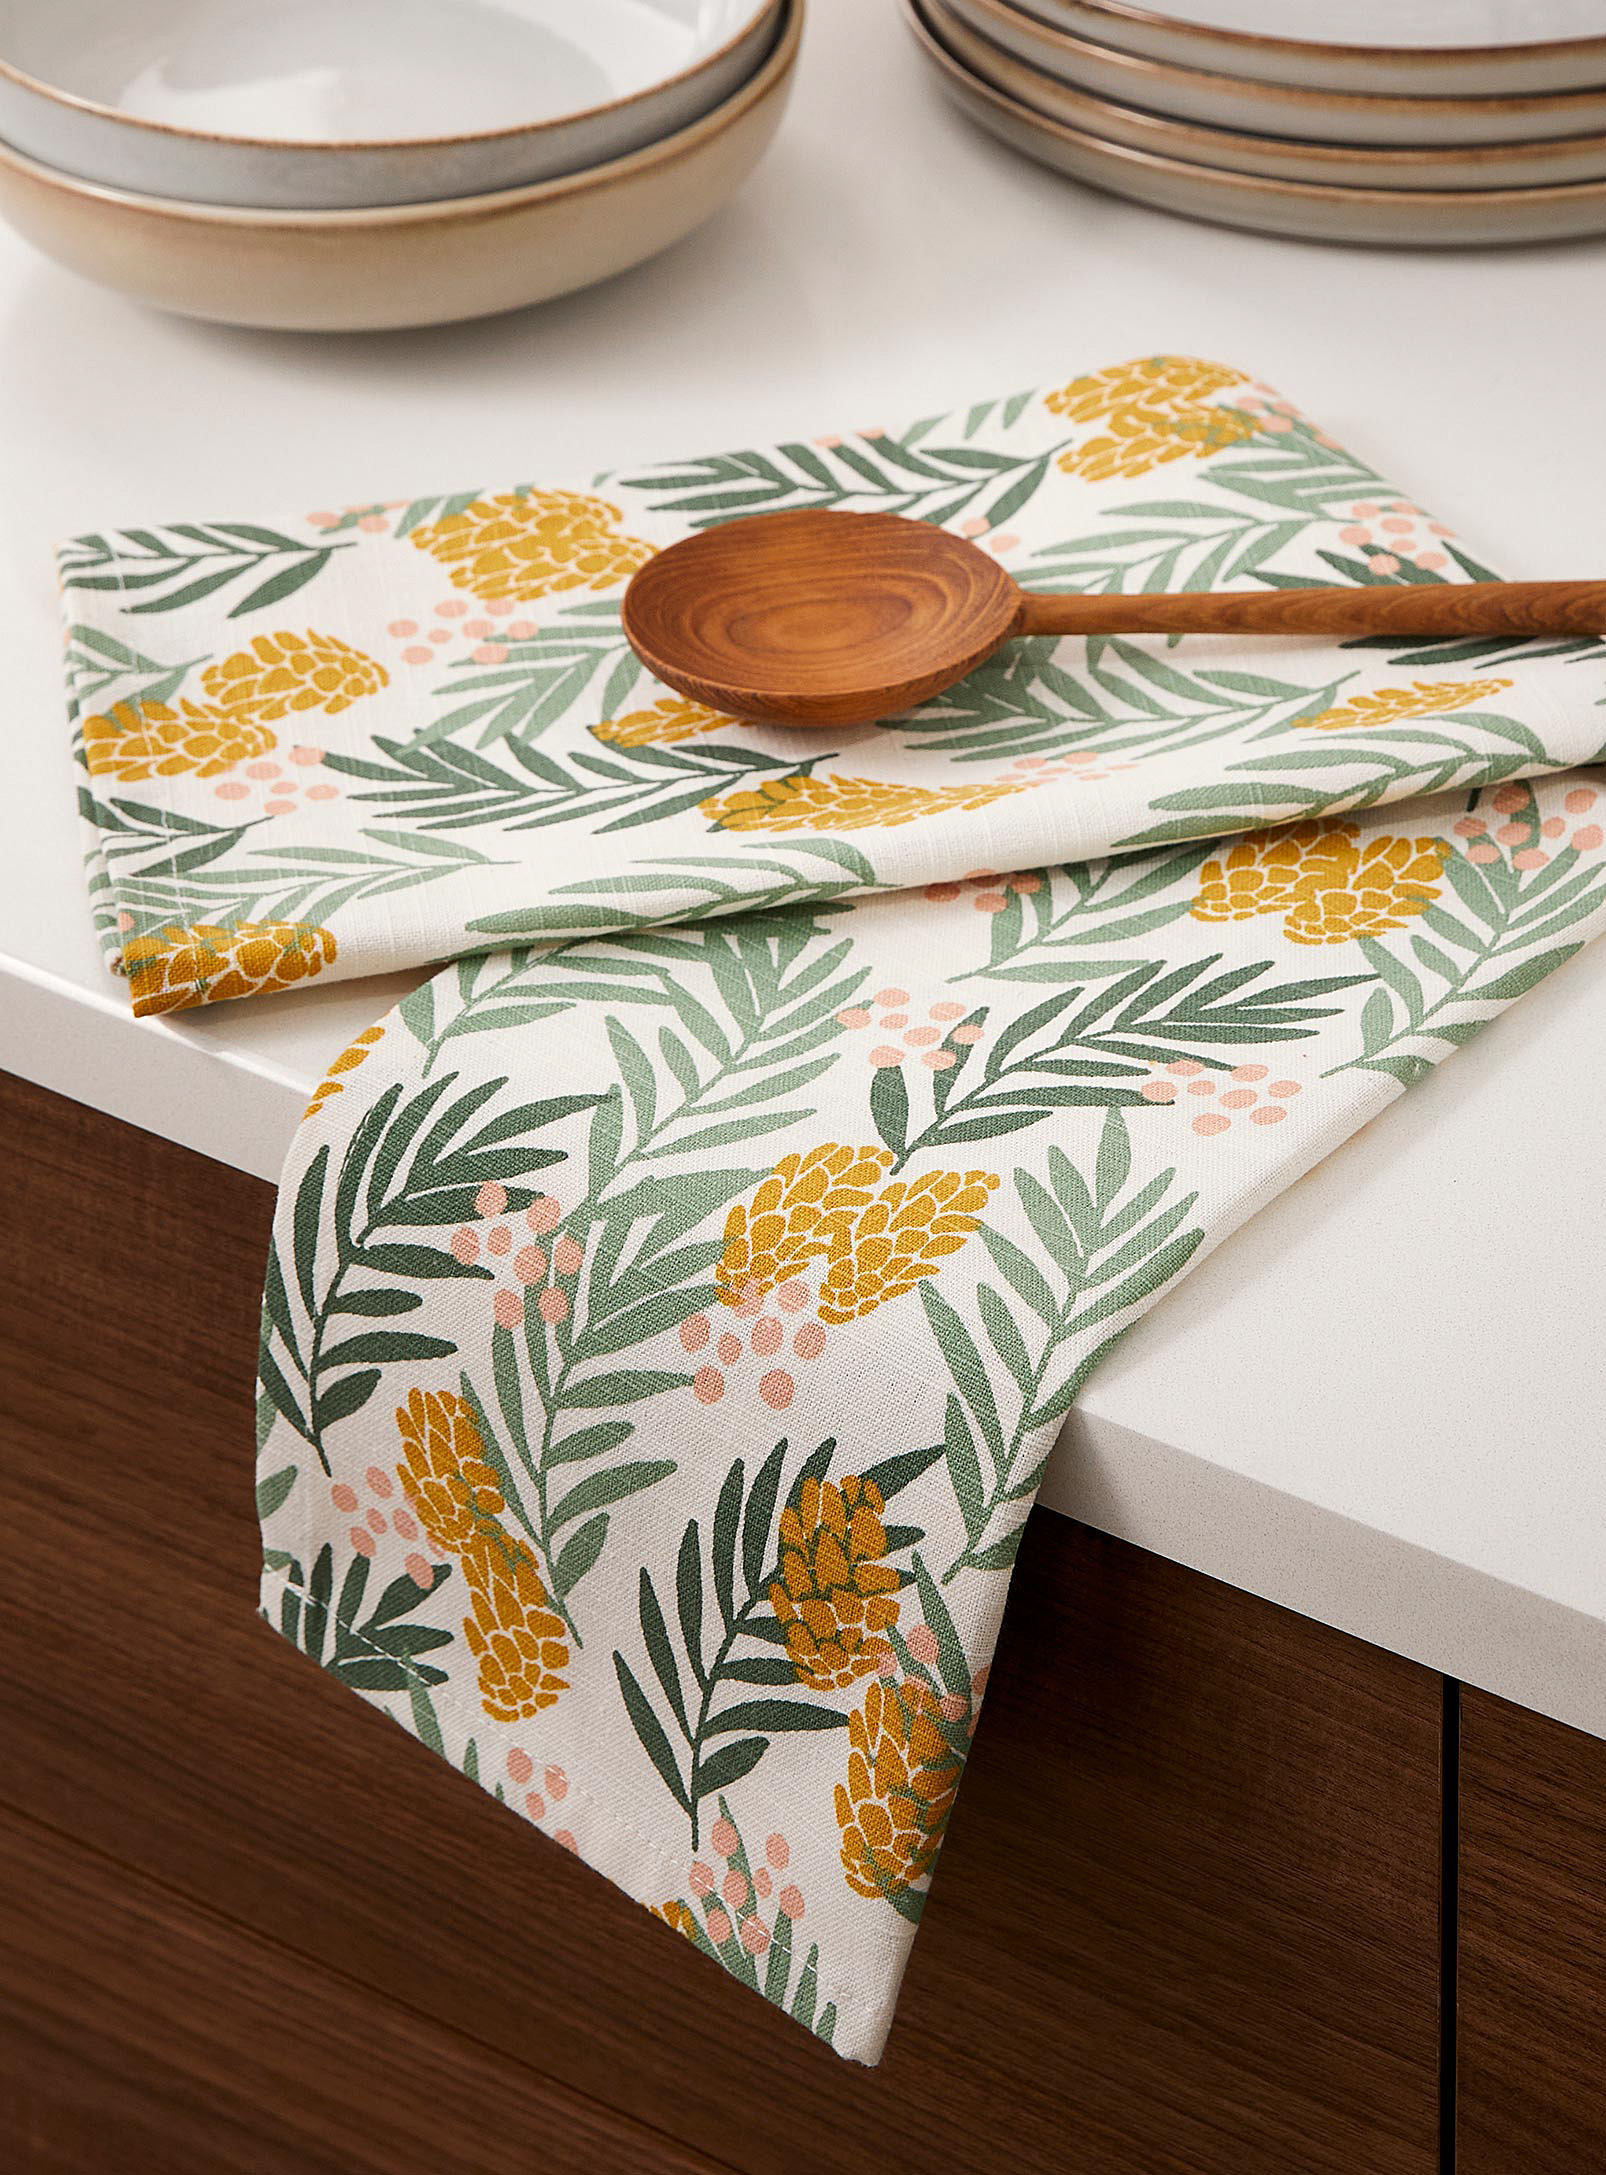 Simons Maison - Summer foliage recycled fibre tea towel